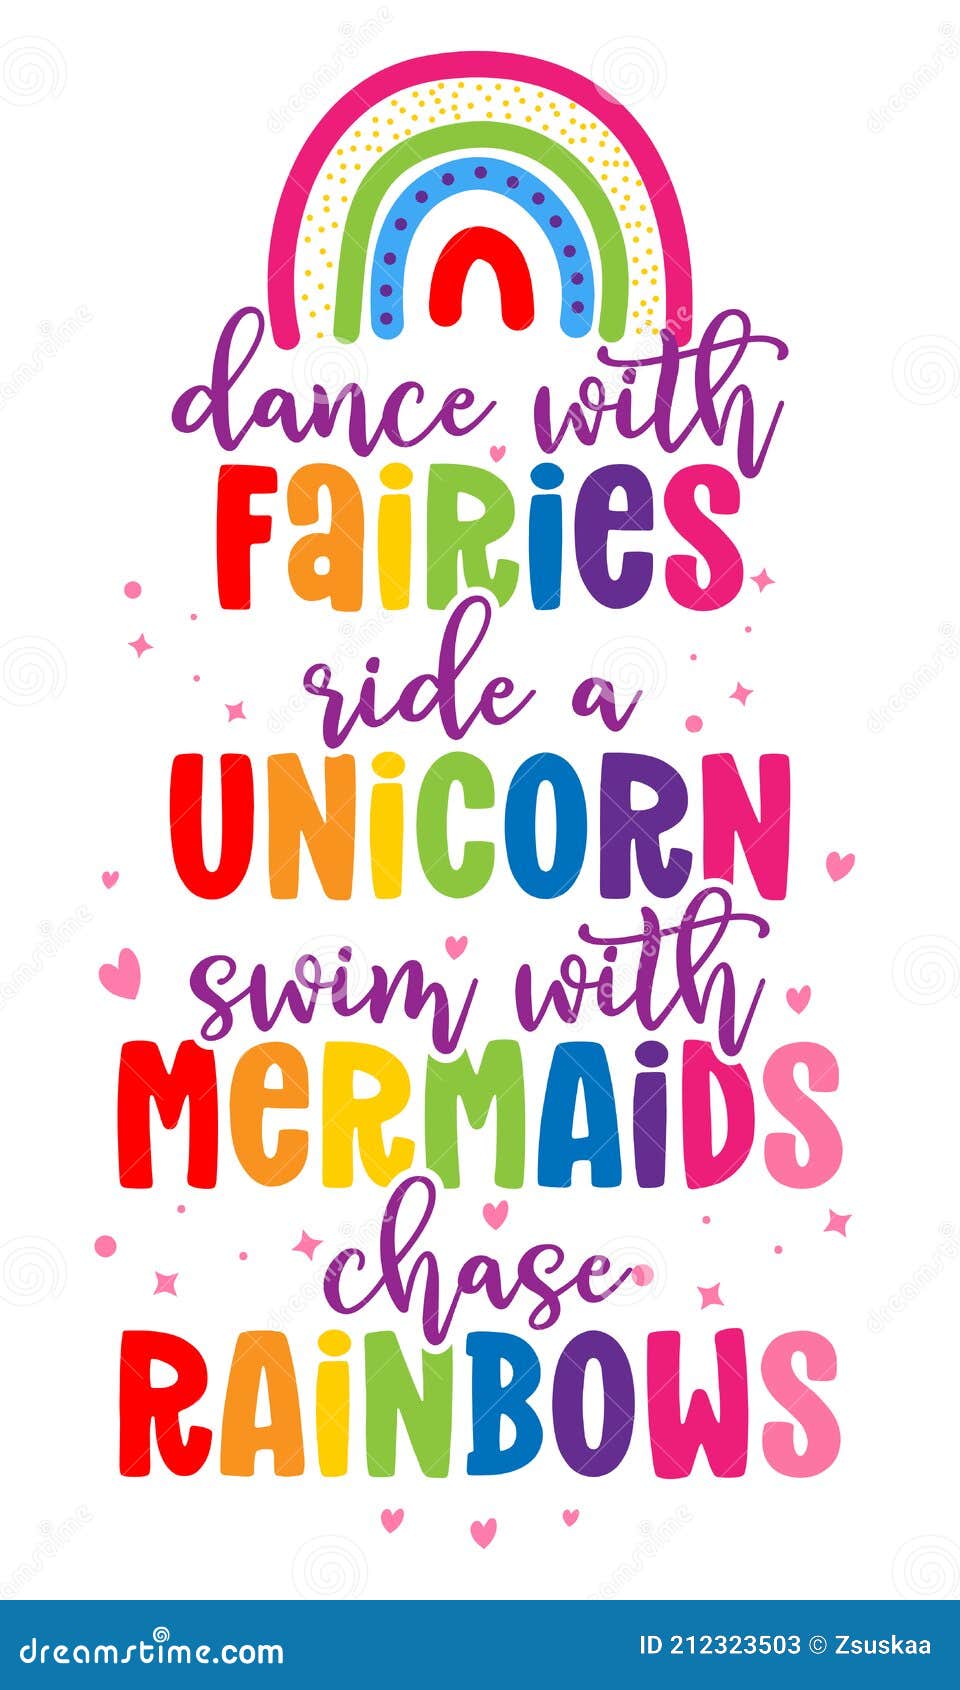 dance with fairies ride a unicorn swim with mermaids chase rainbows